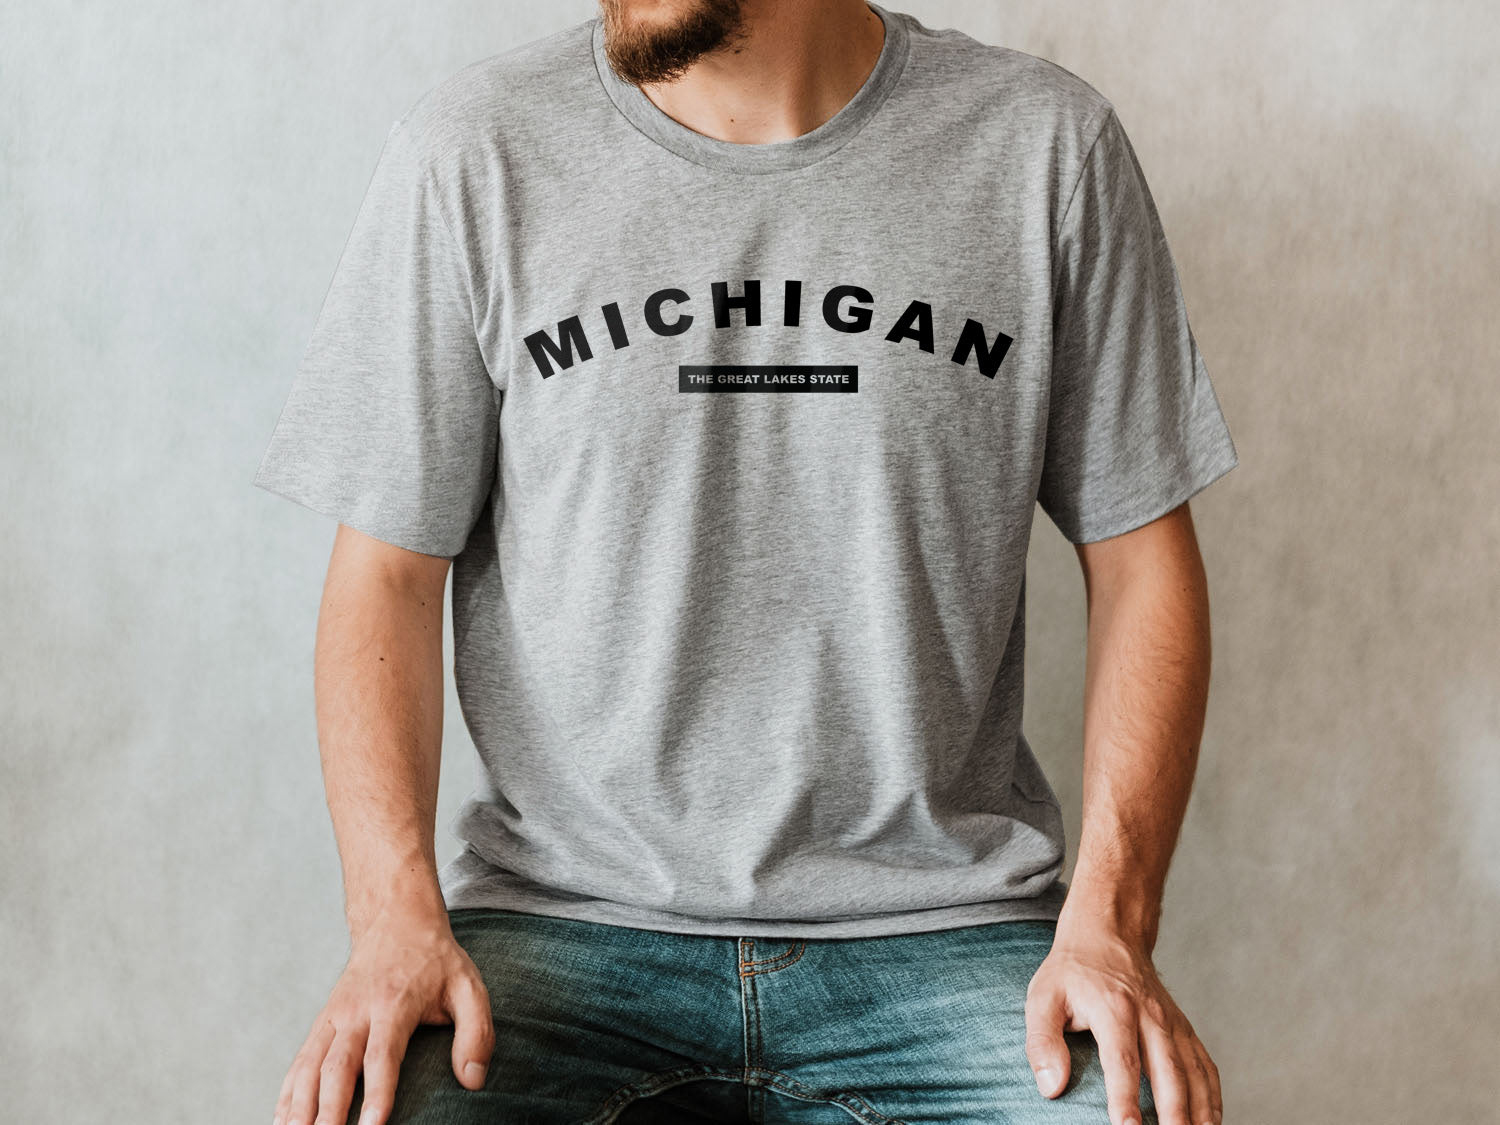 Michigan The Great Lakes State T-shirt - United States Name & Slogan Minimal Design Printed Tee Shirt